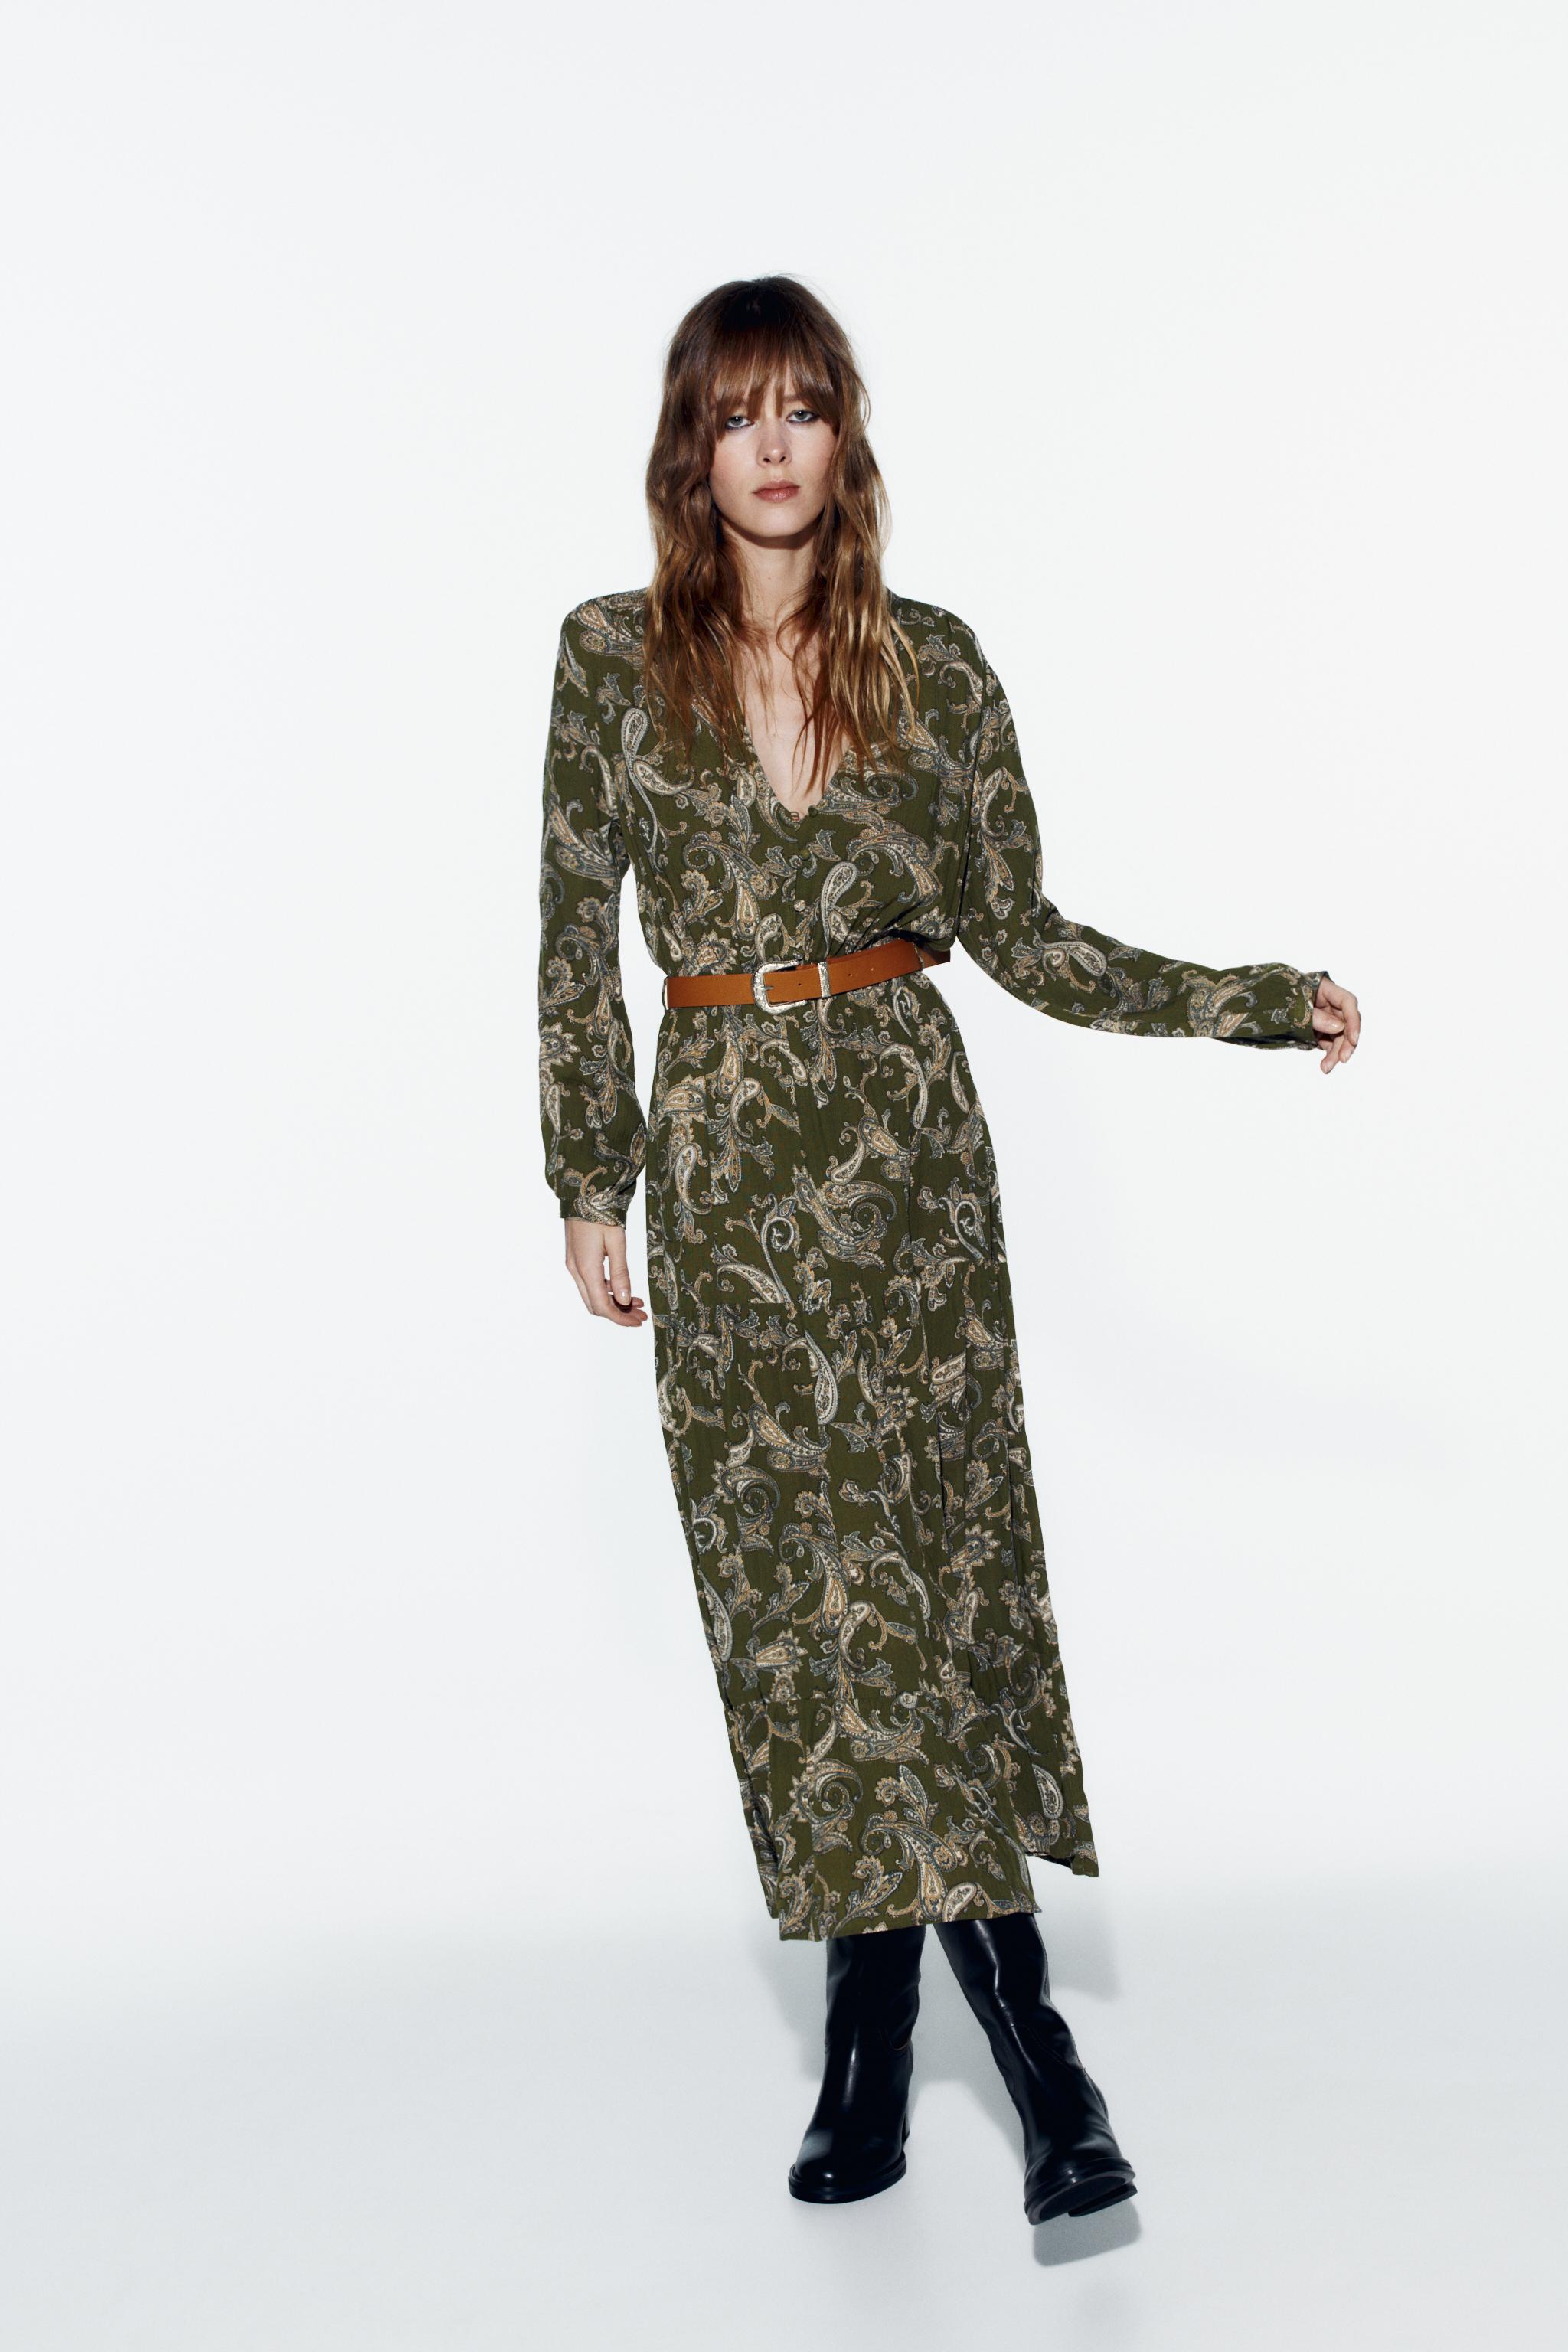 Zara Leopard Print Satin Midi Dress  Animal print dresses, Satin midi  dress, Dress